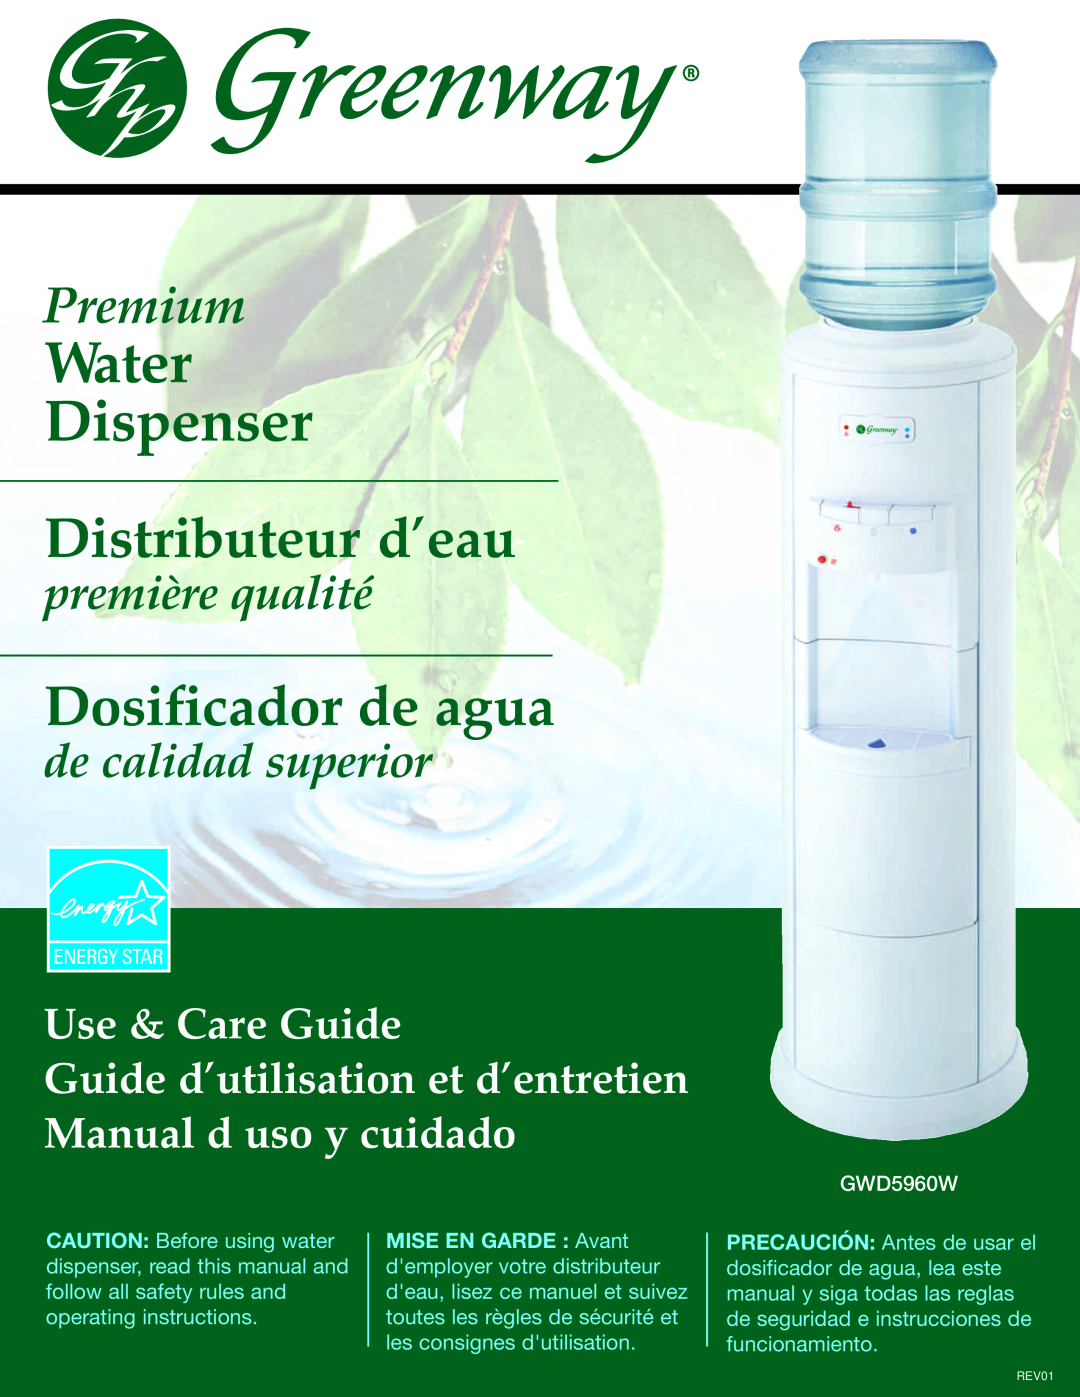 Greenway Home Products GWD5960W operating instructions Water Dispenser, Distributeur d’eau, Dosificador de agua, Premium 